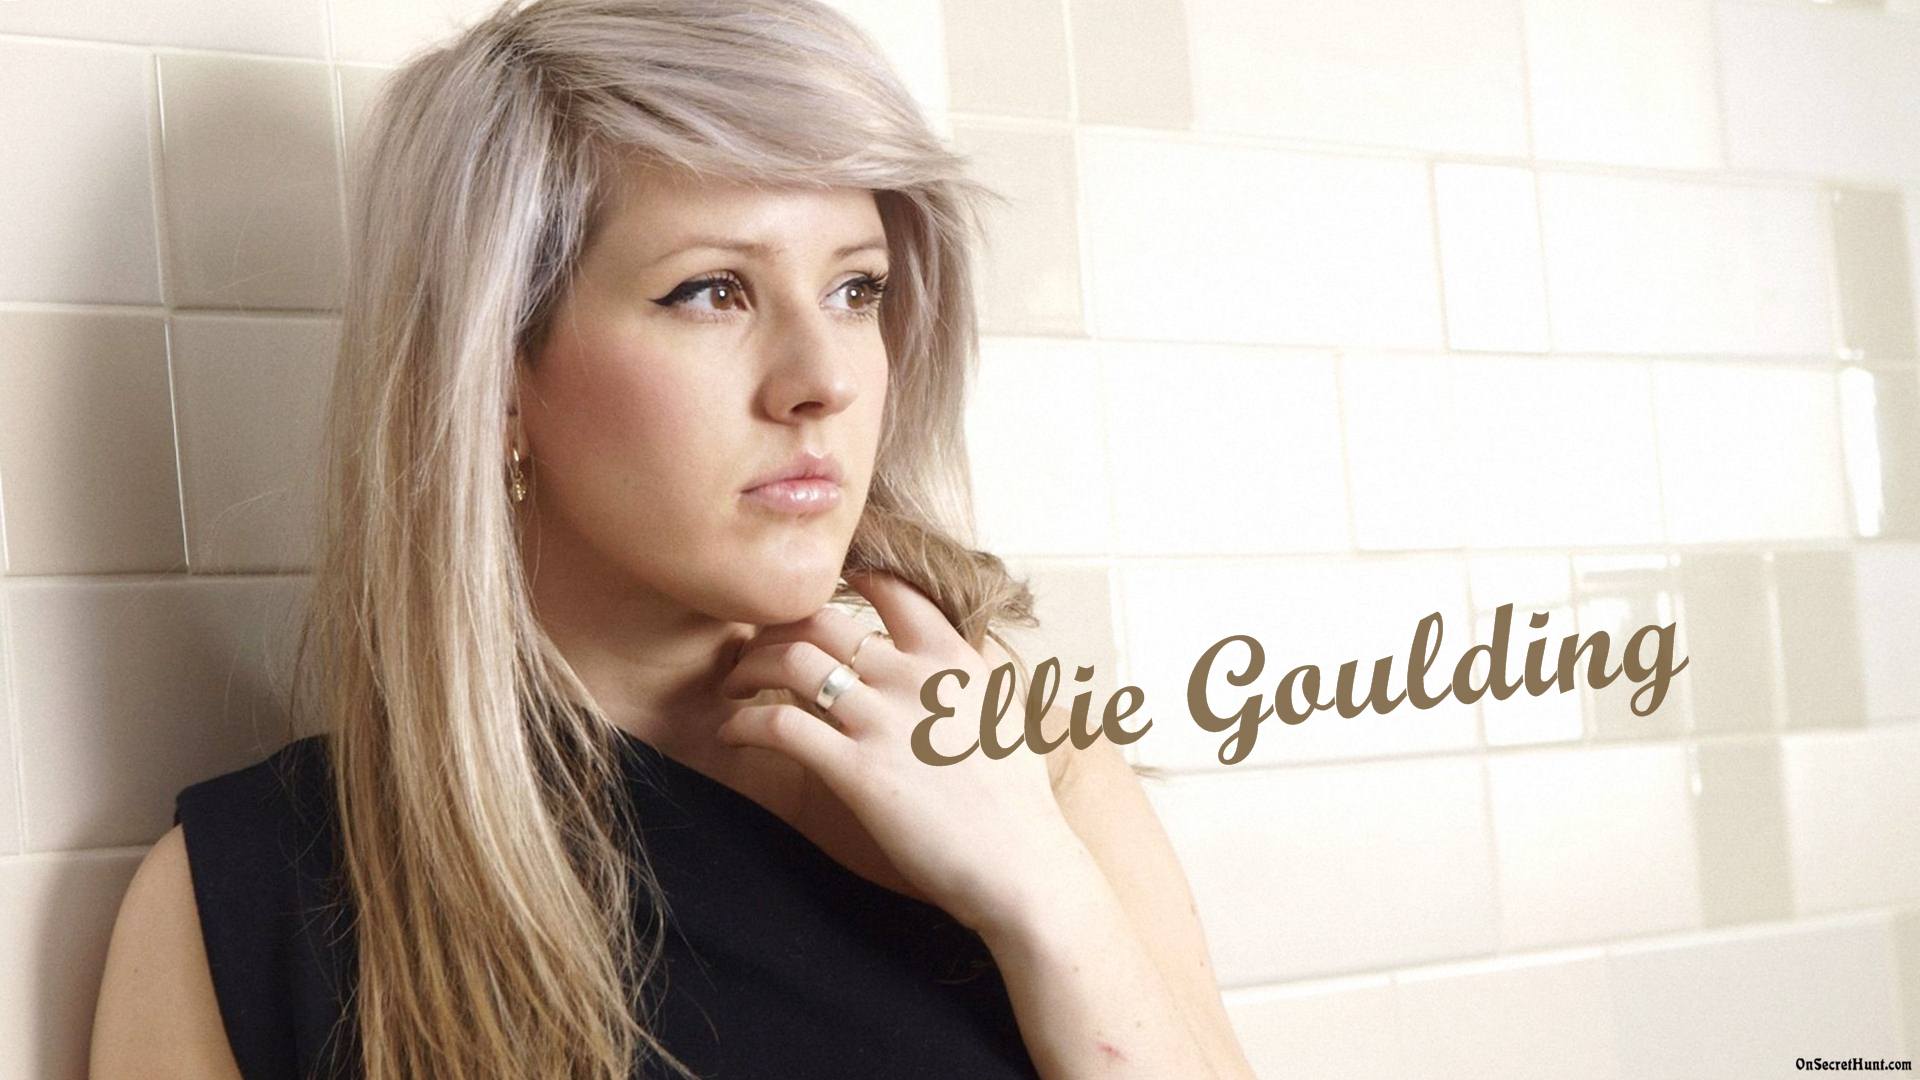 Beautiful Ellie Goulding Photo Shoot Wallpapers